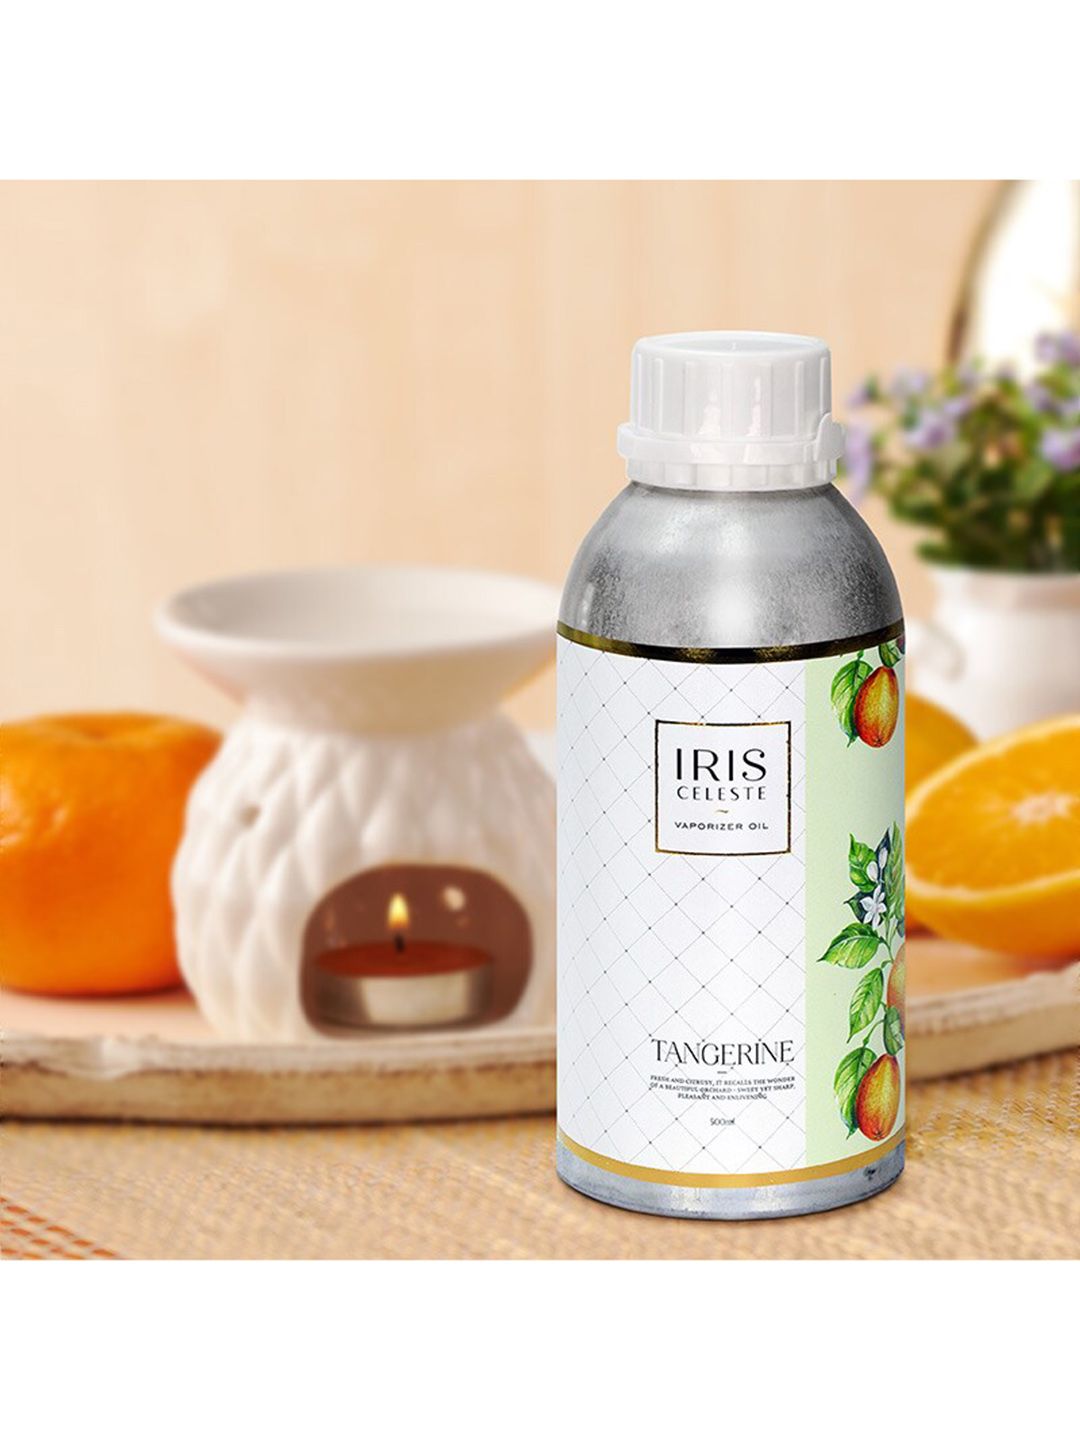 Iris Celeste Tangerine Concentrated Vaporizer Oil 500 ml Price in India